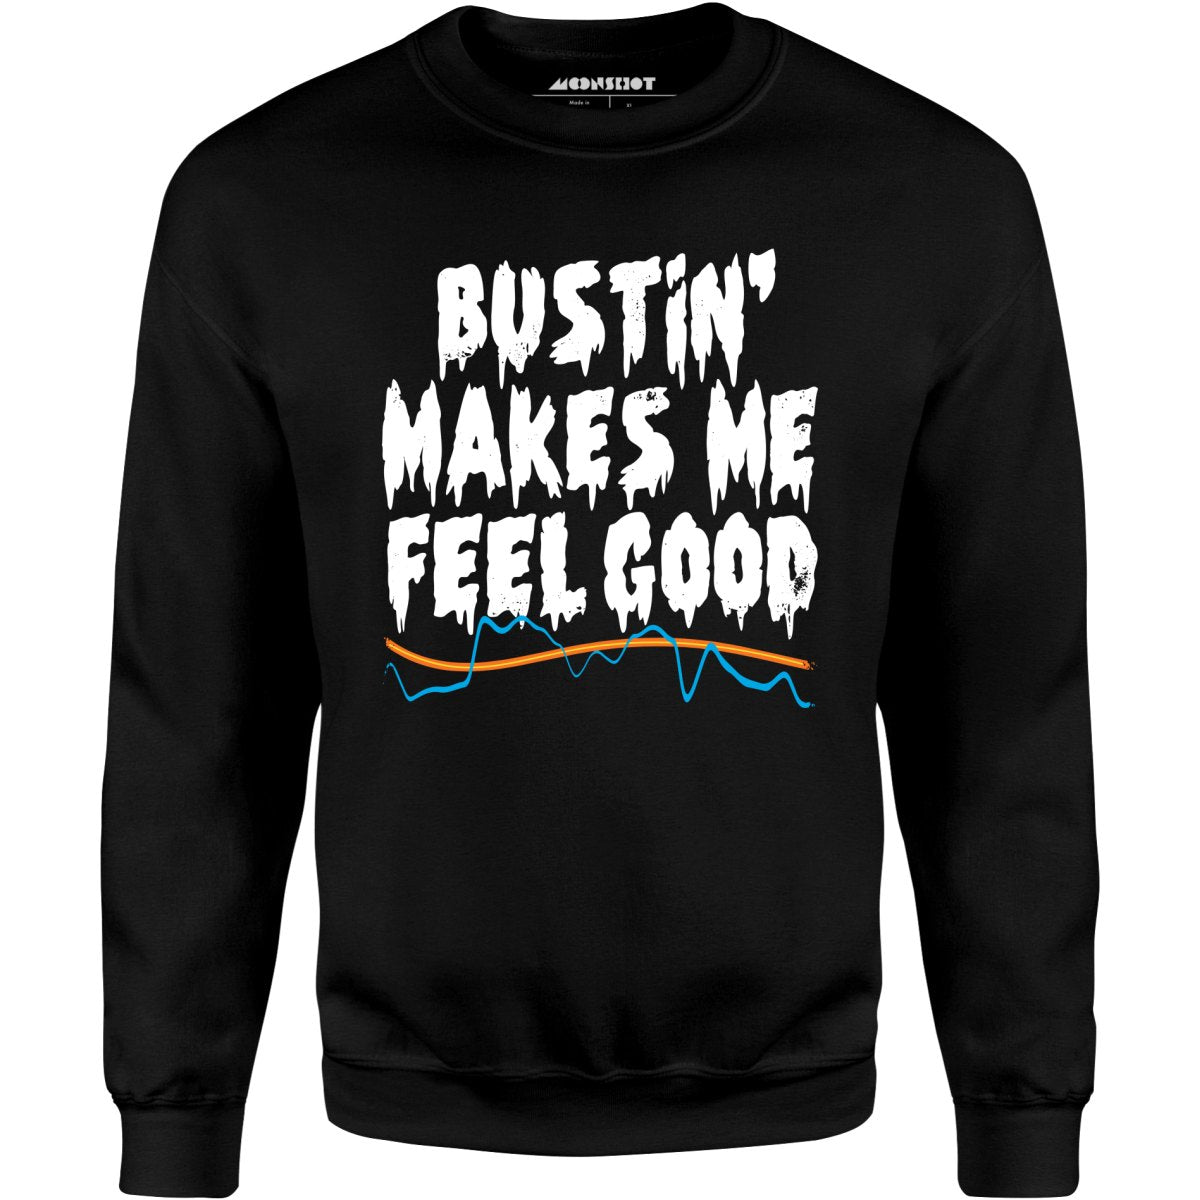 Bustin' Makes Me Feel Good - Unisex Sweatshirt